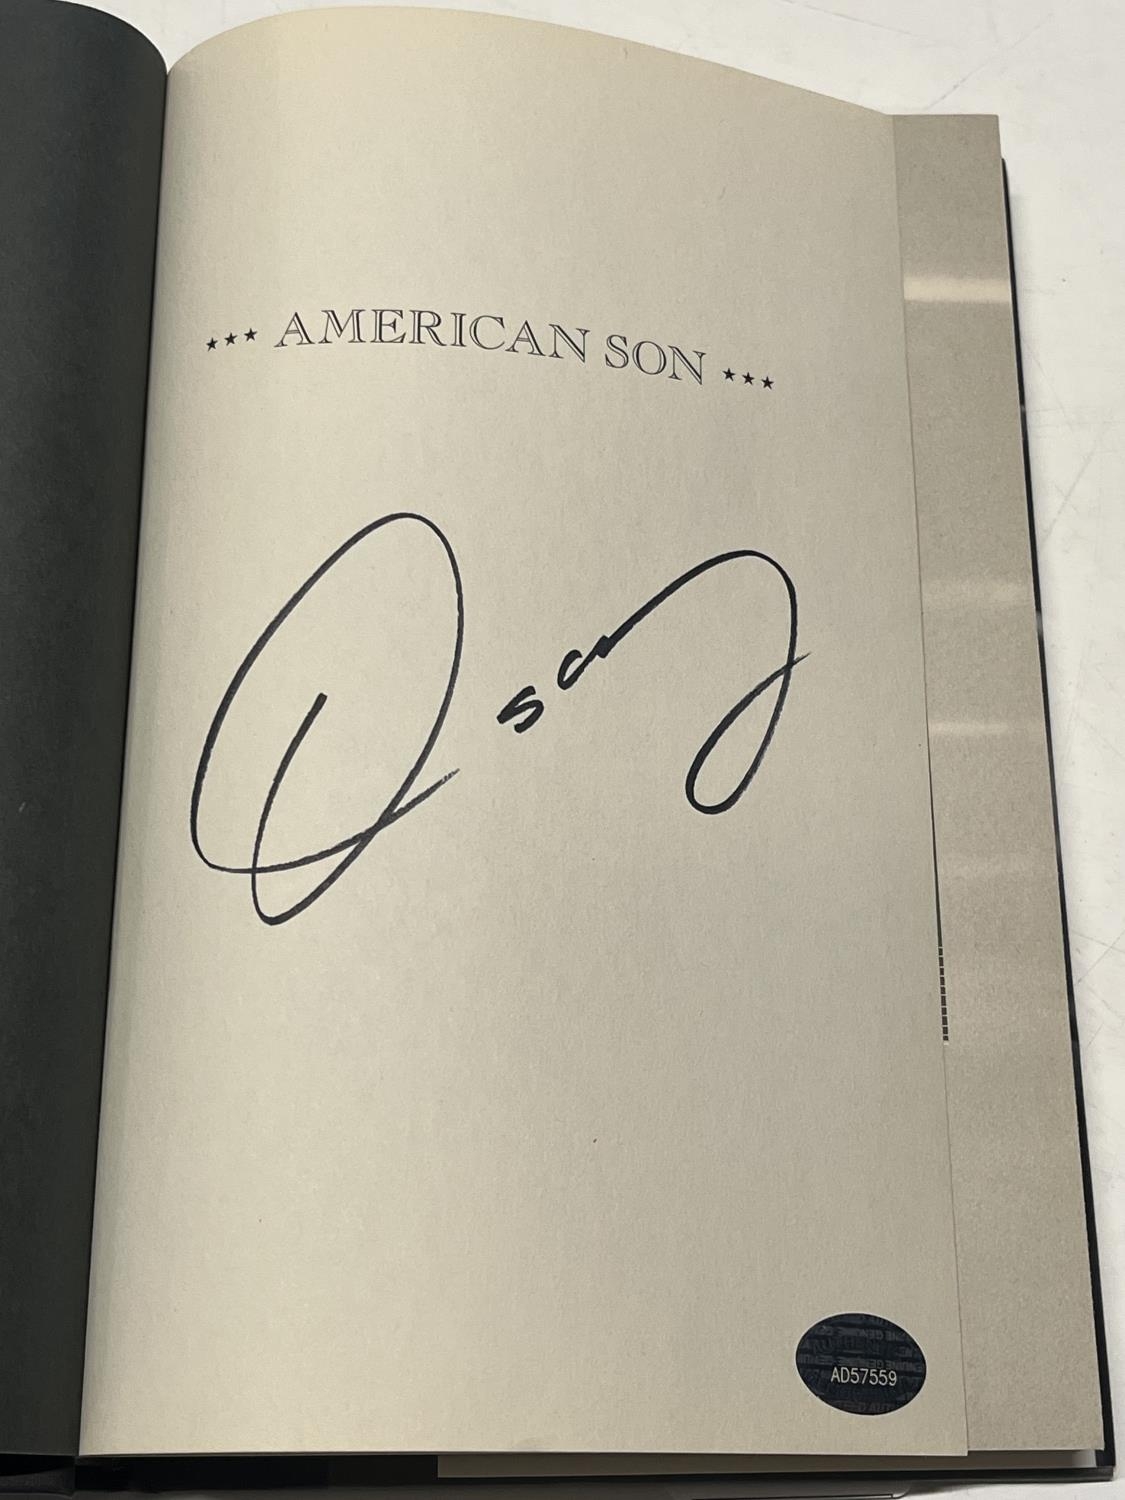 A Oscar de la Hoya book signed with COA - Image 2 of 2